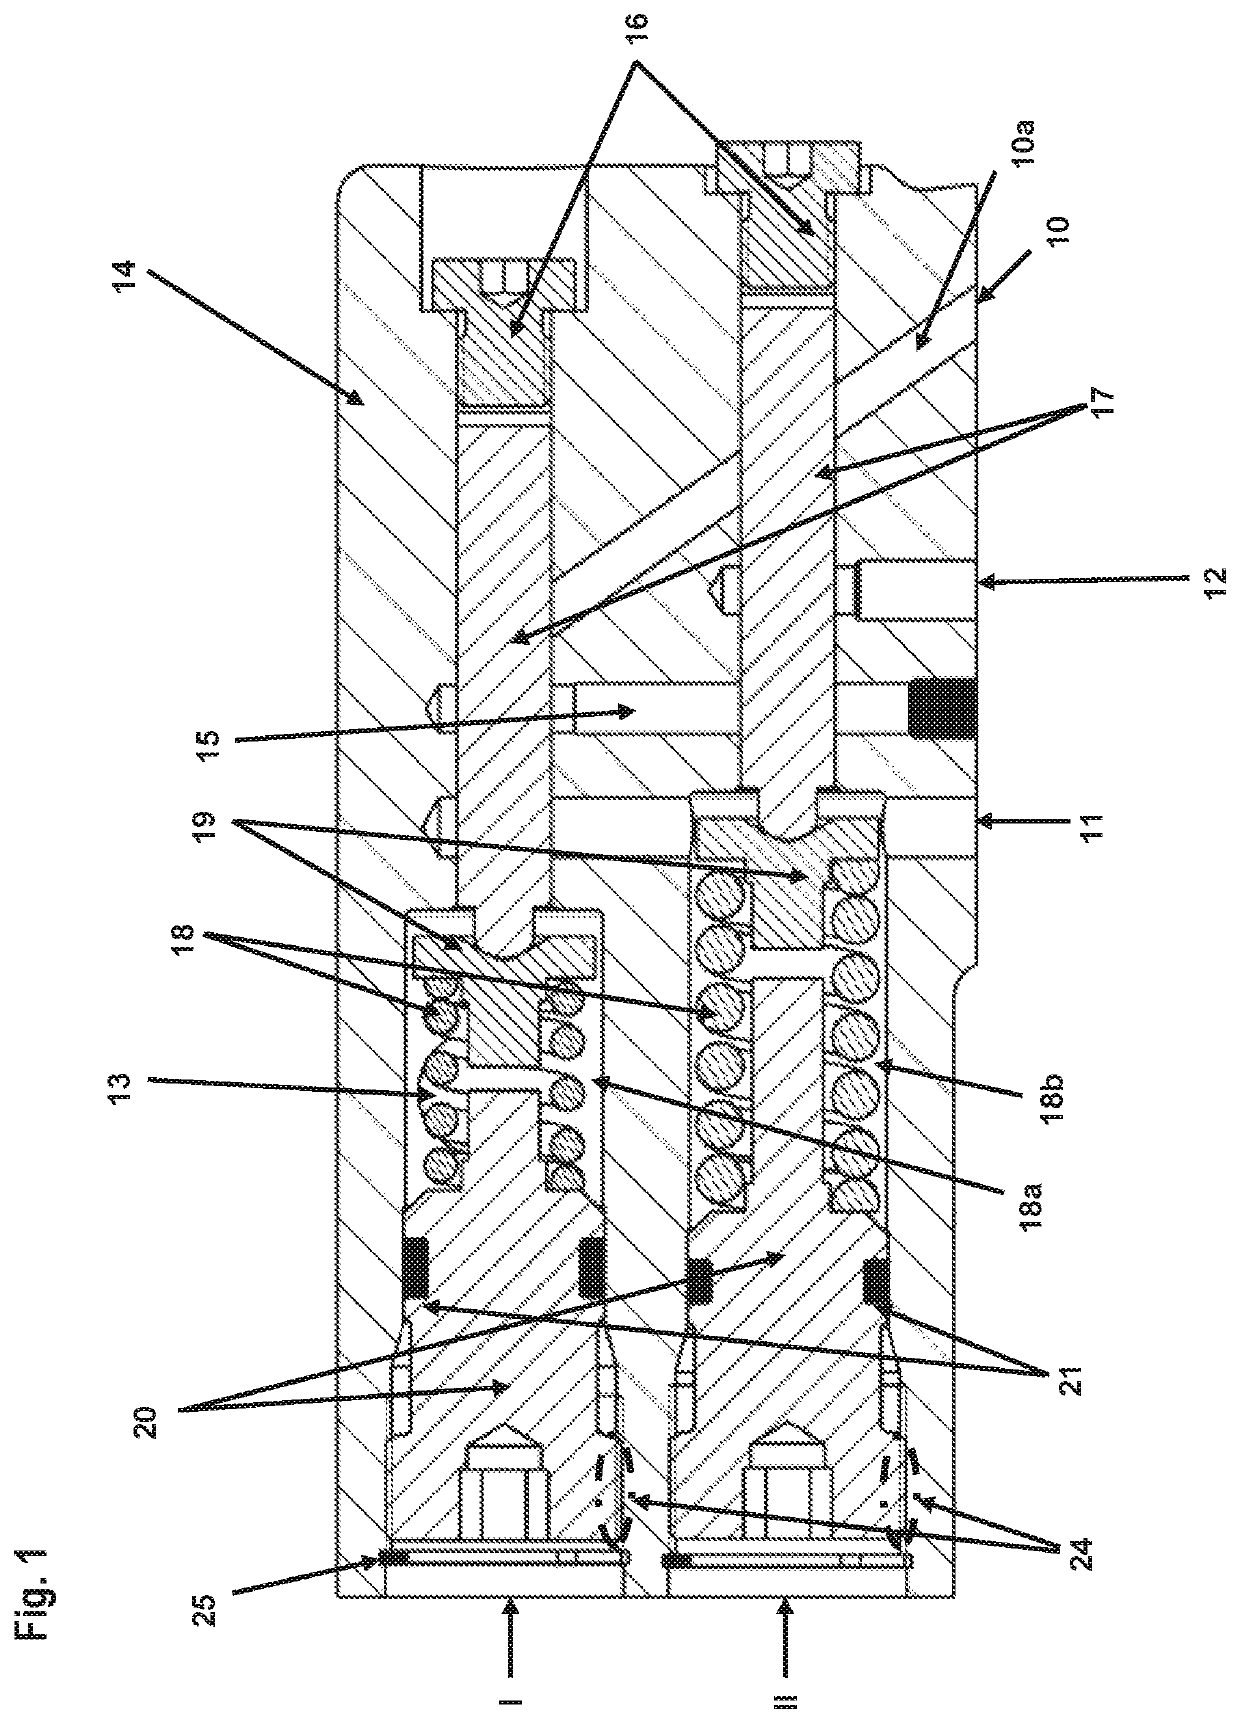 Hydraulic apparatus, in particular hydraulic valve or hydraulic regulator